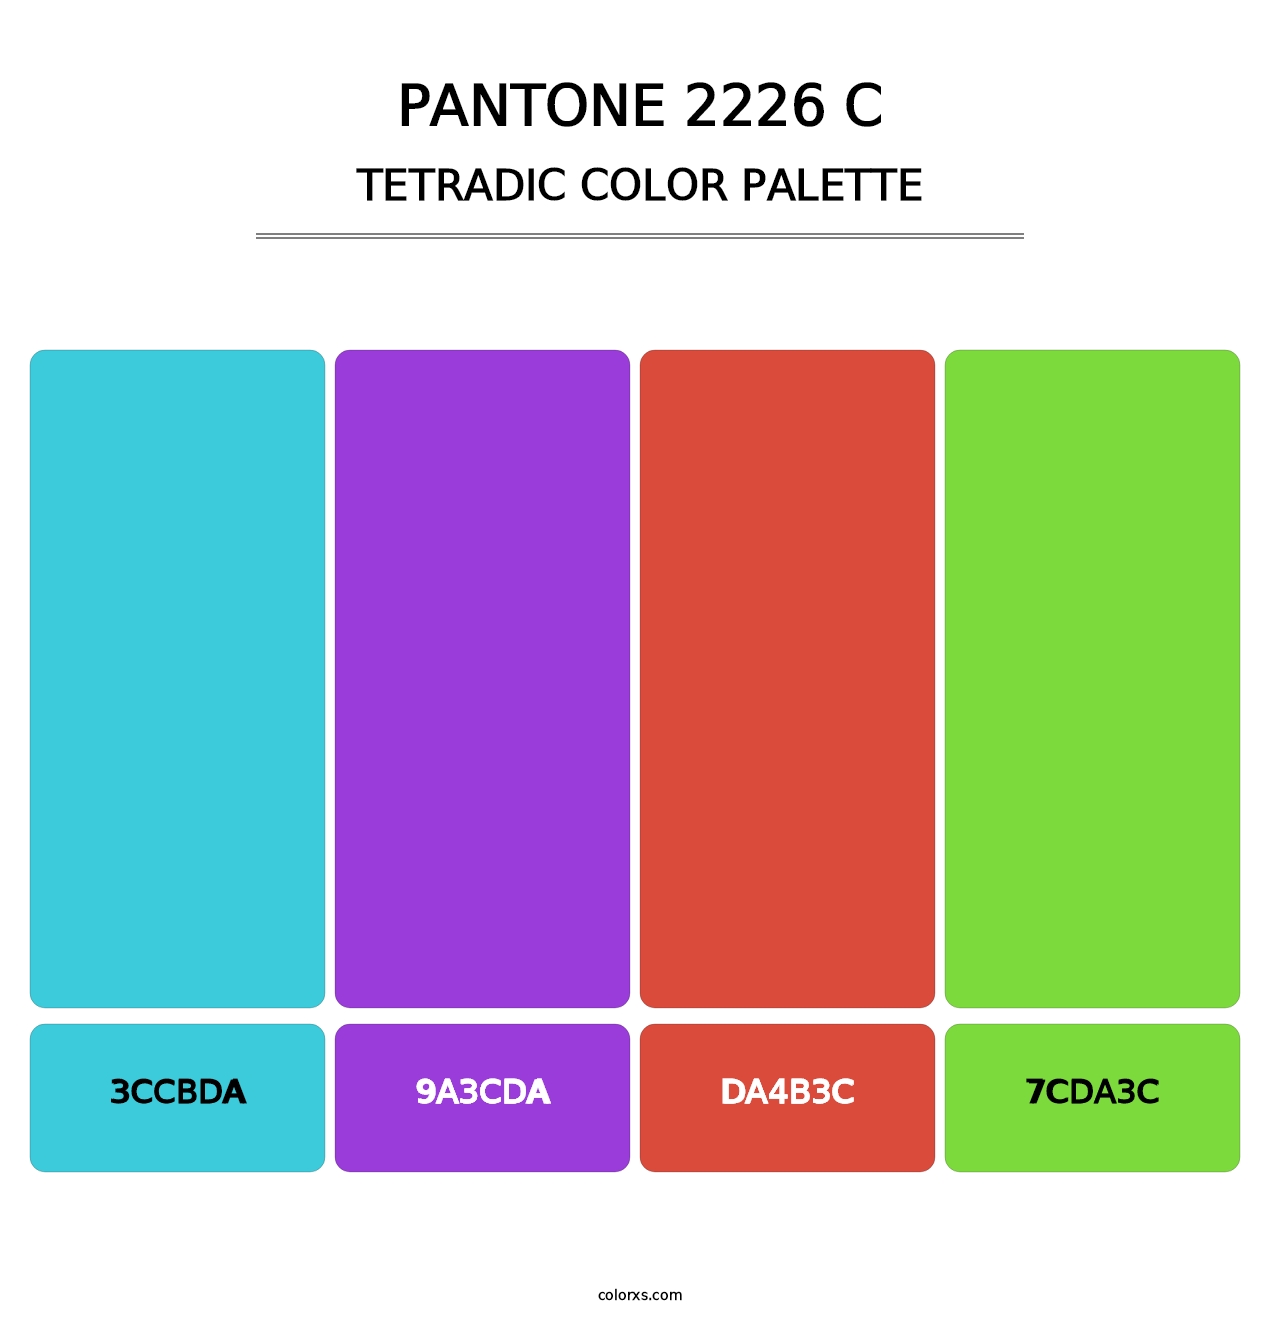 PANTONE 2226 C - Tetradic Color Palette